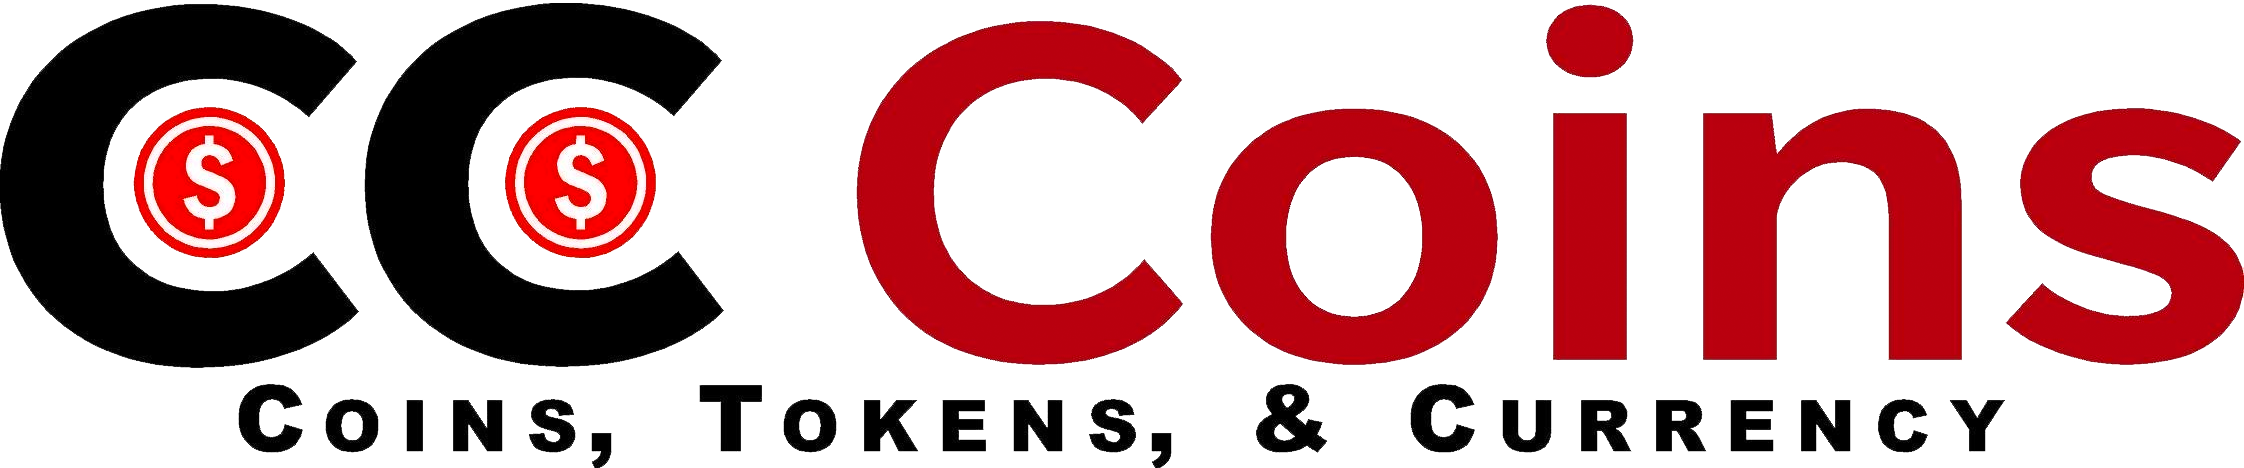 CC Coins logo